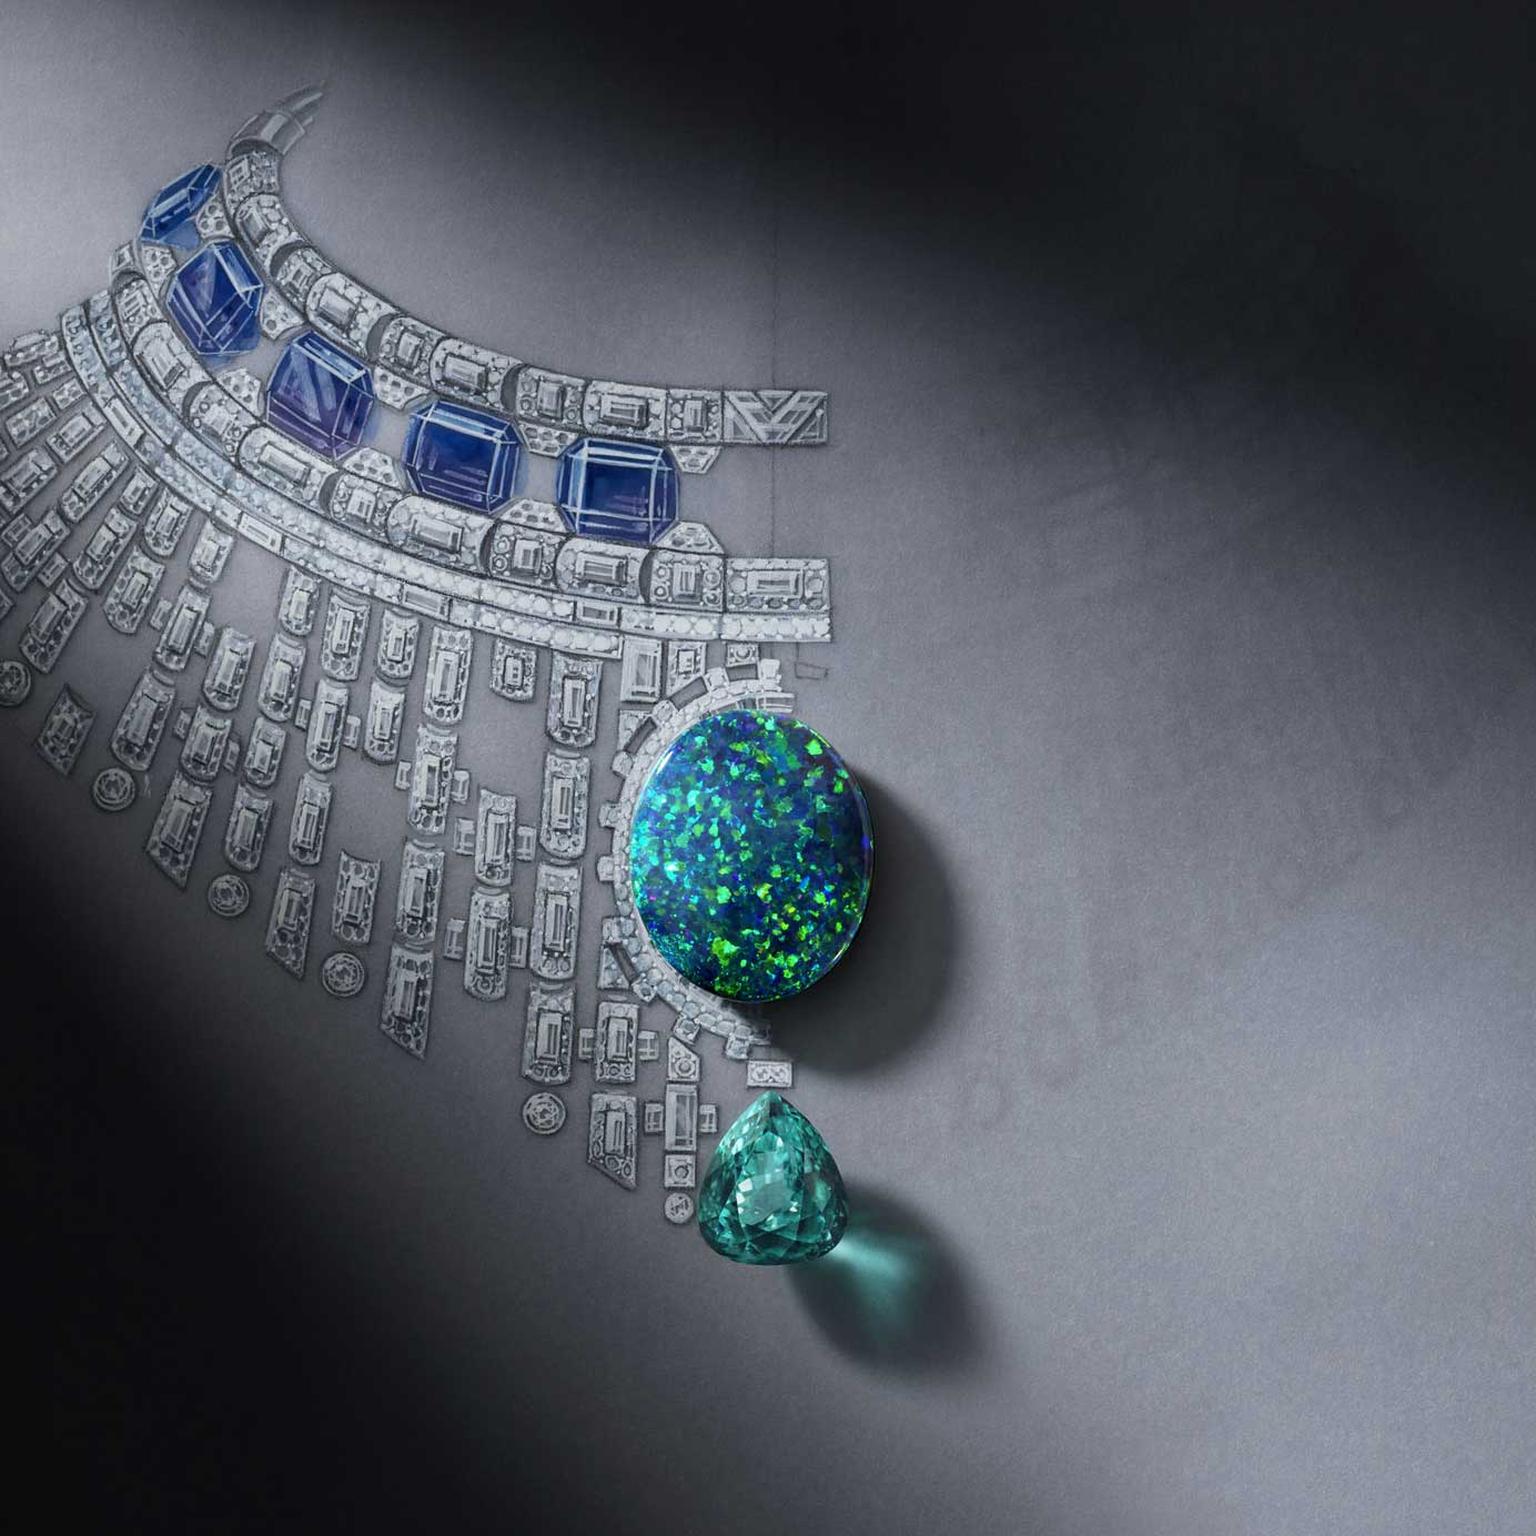 Stellar Times: Louis Vuitton's Cosmic High Jewellery Journey